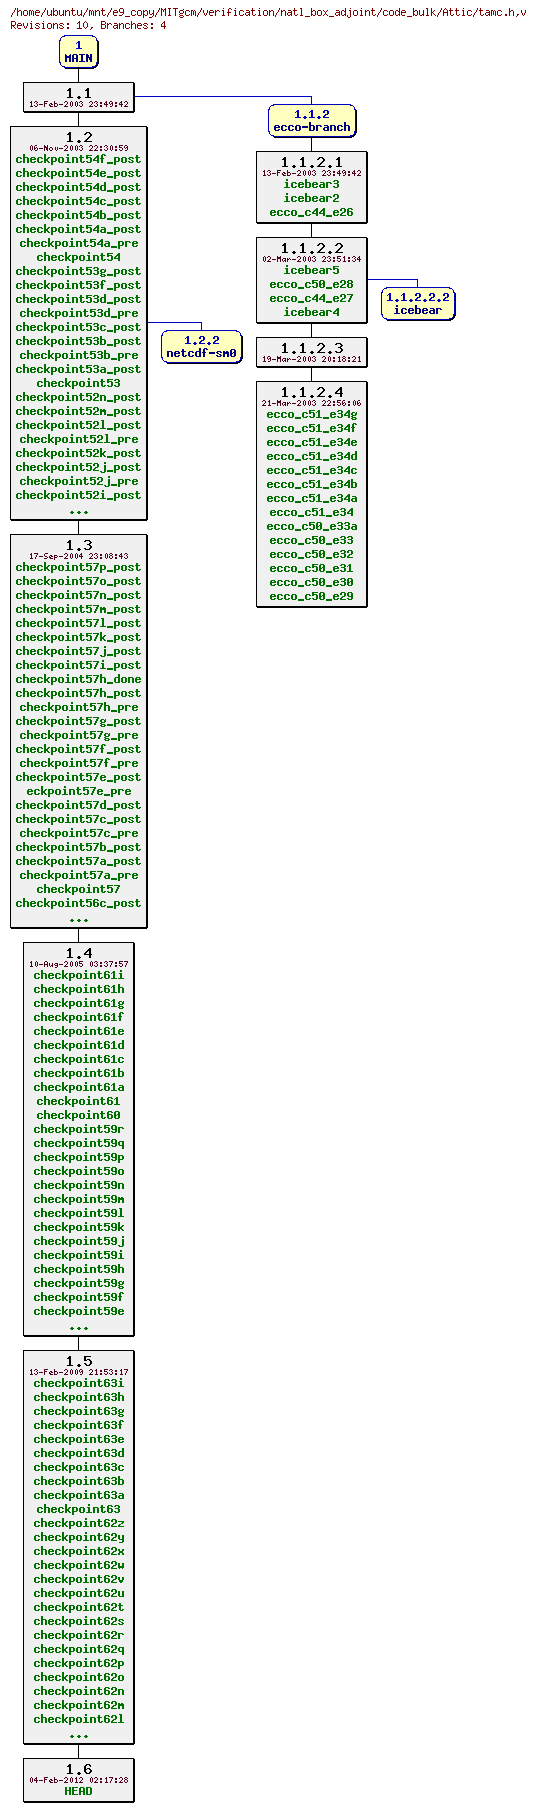 Revisions of MITgcm/verification/natl_box_adjoint/code_bulk/tamc.h